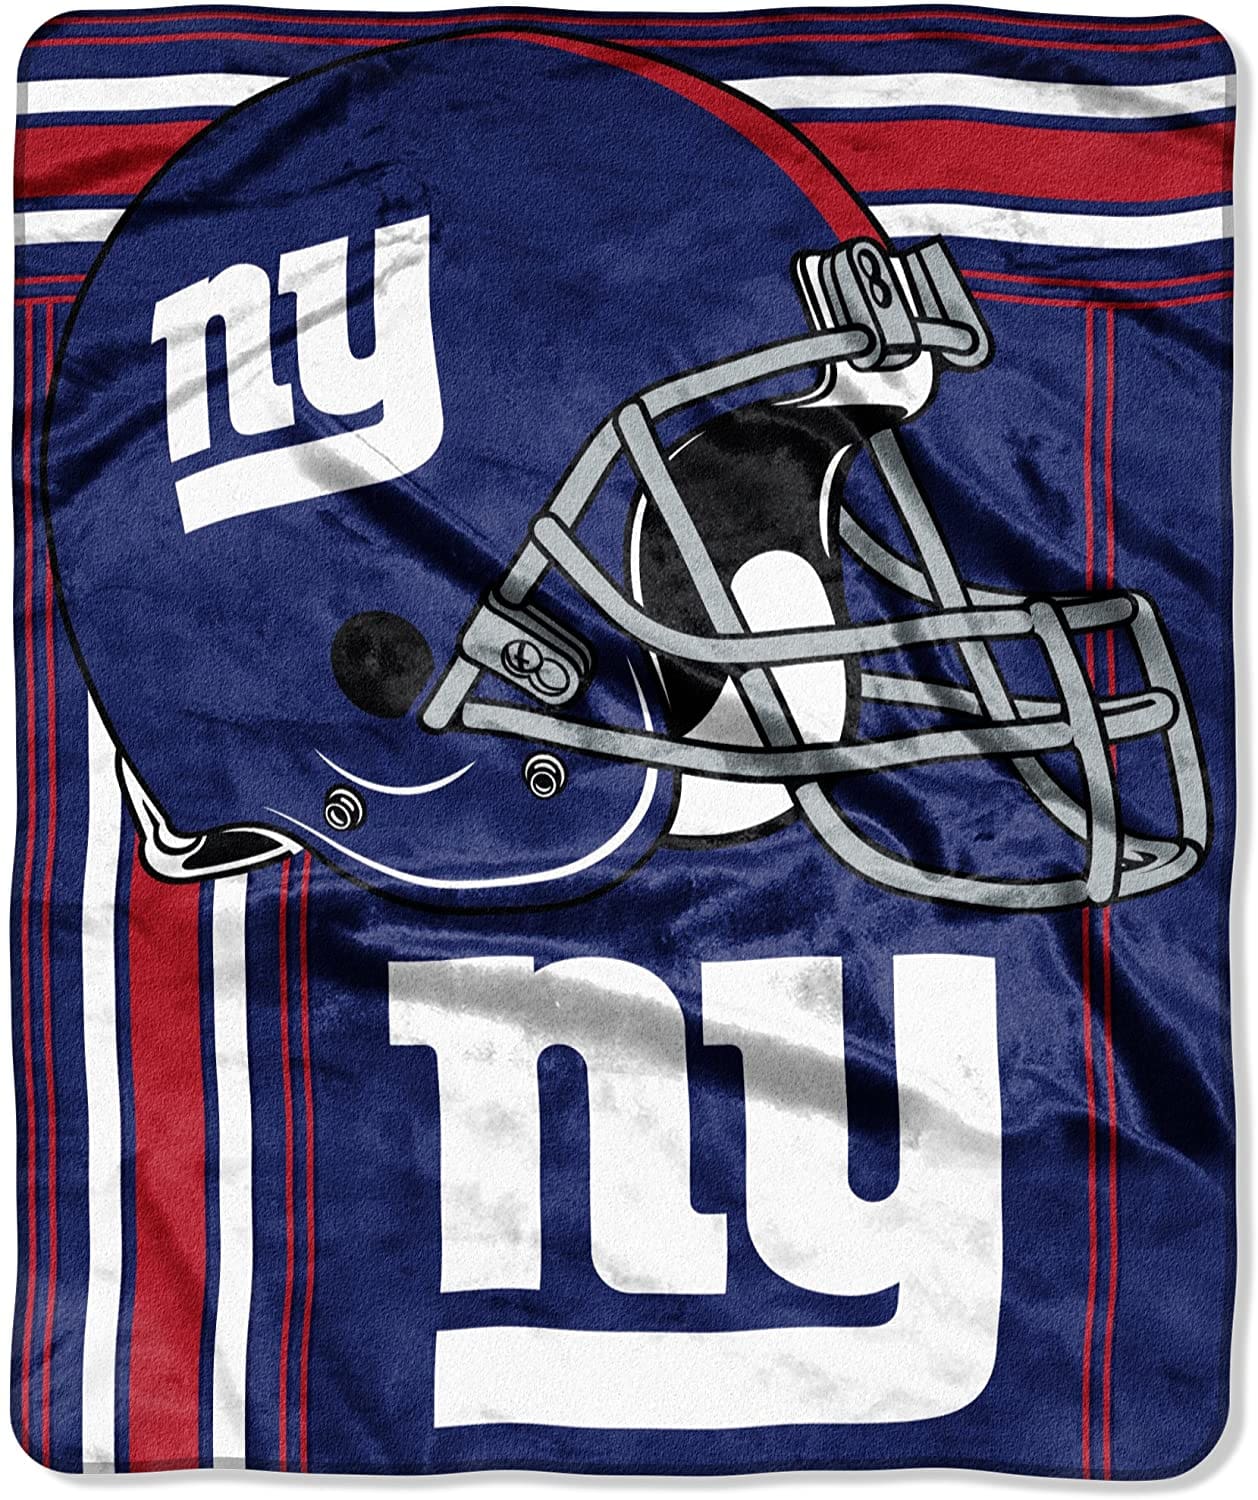 Officially Licensed Nfl Throw New York Giants Fleece Blanket